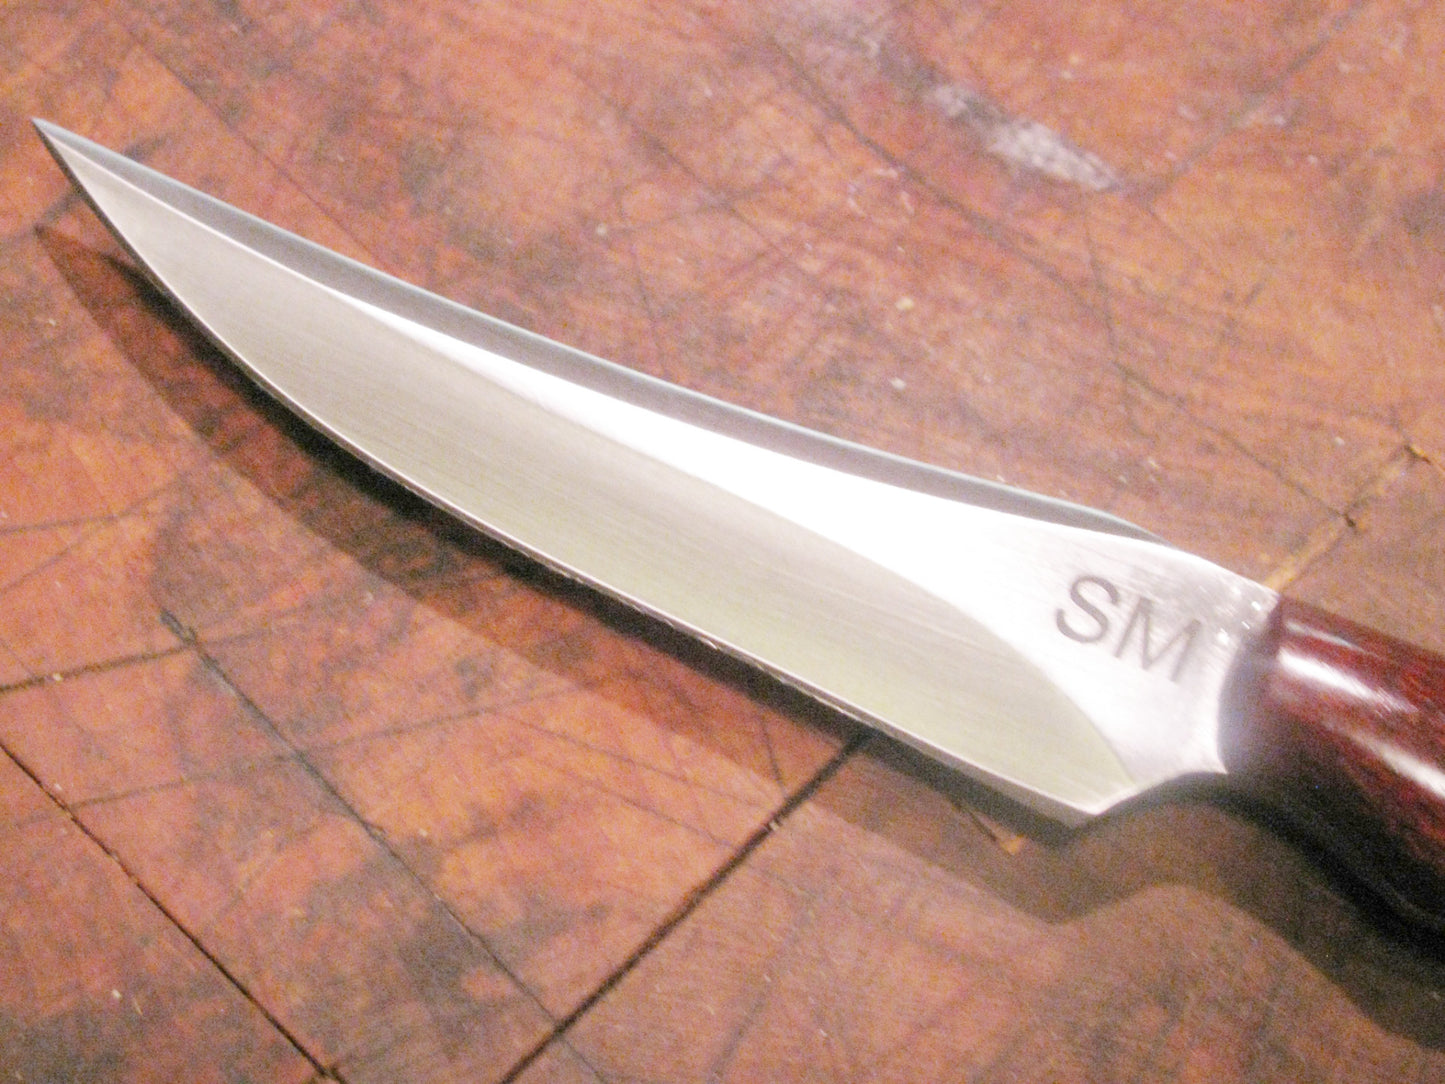 FX-006 Blue Micarta Handle Skinner Knife w/ 420 HC Steel